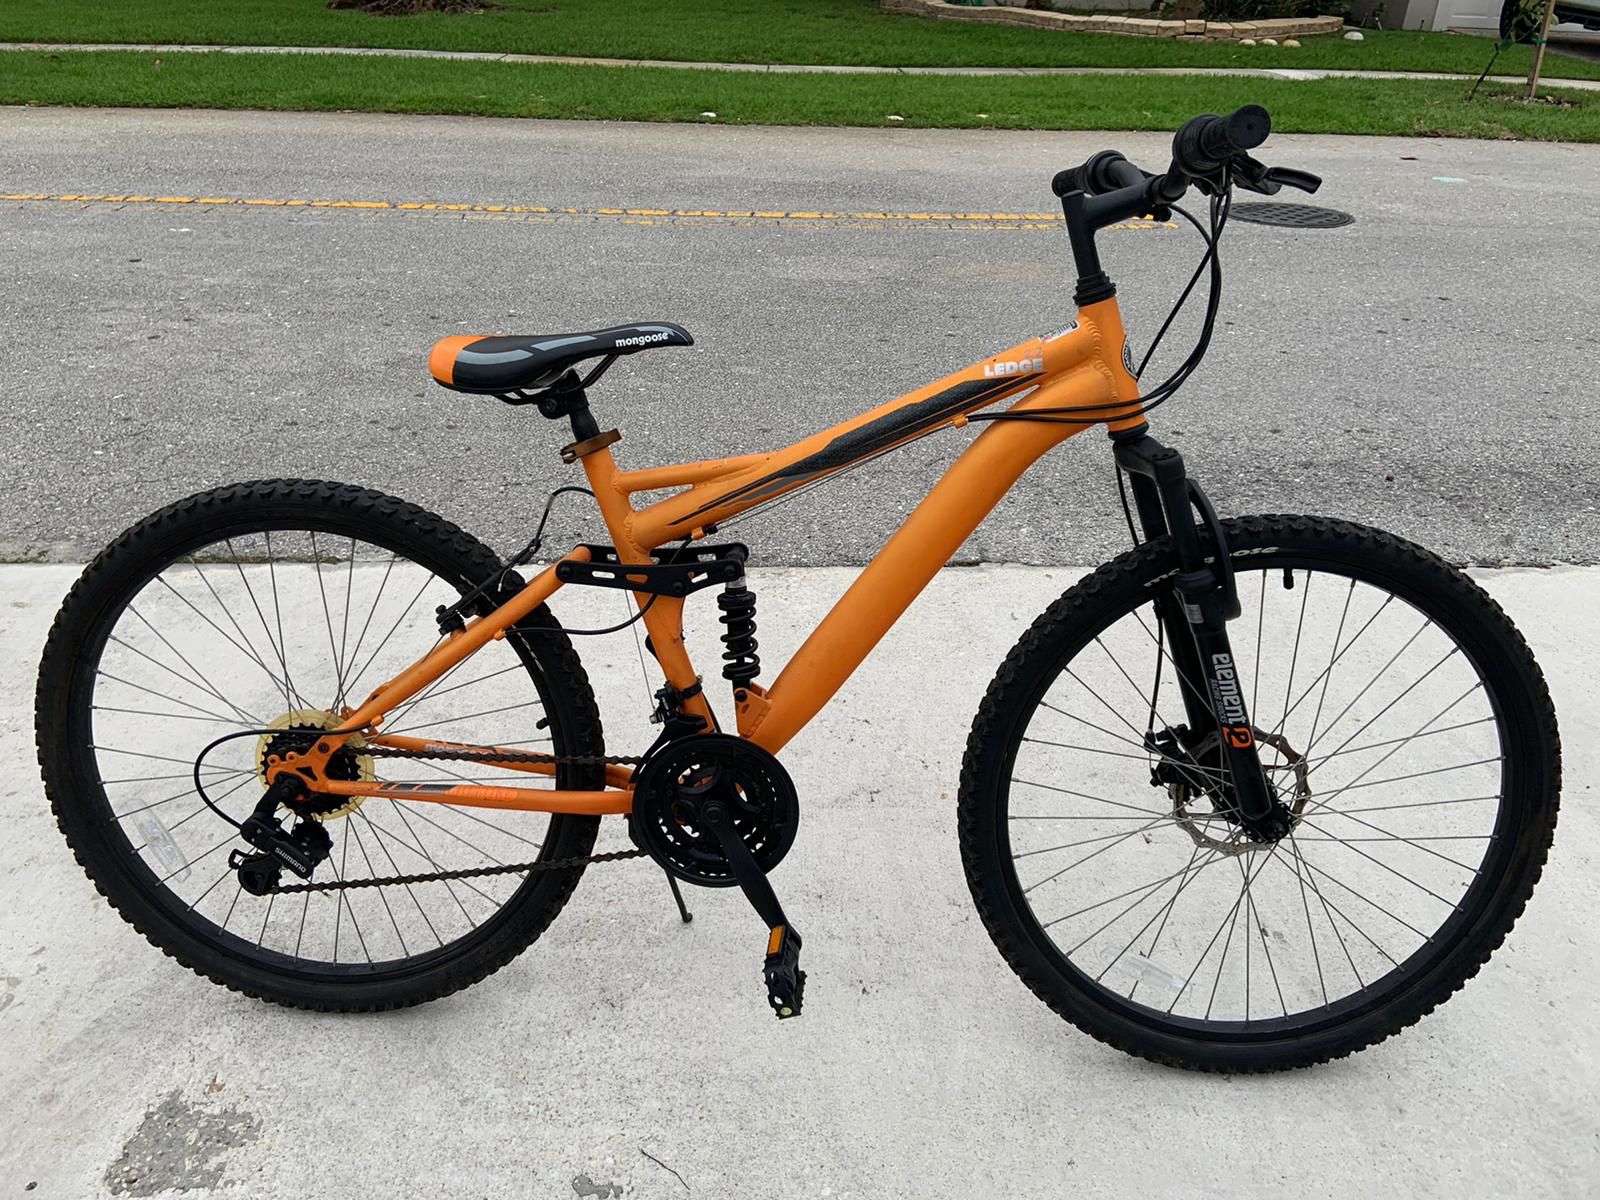 26" Mongoose Ledge 2.2 Men's Mountain Bike Color: Orange Frame: aluminum